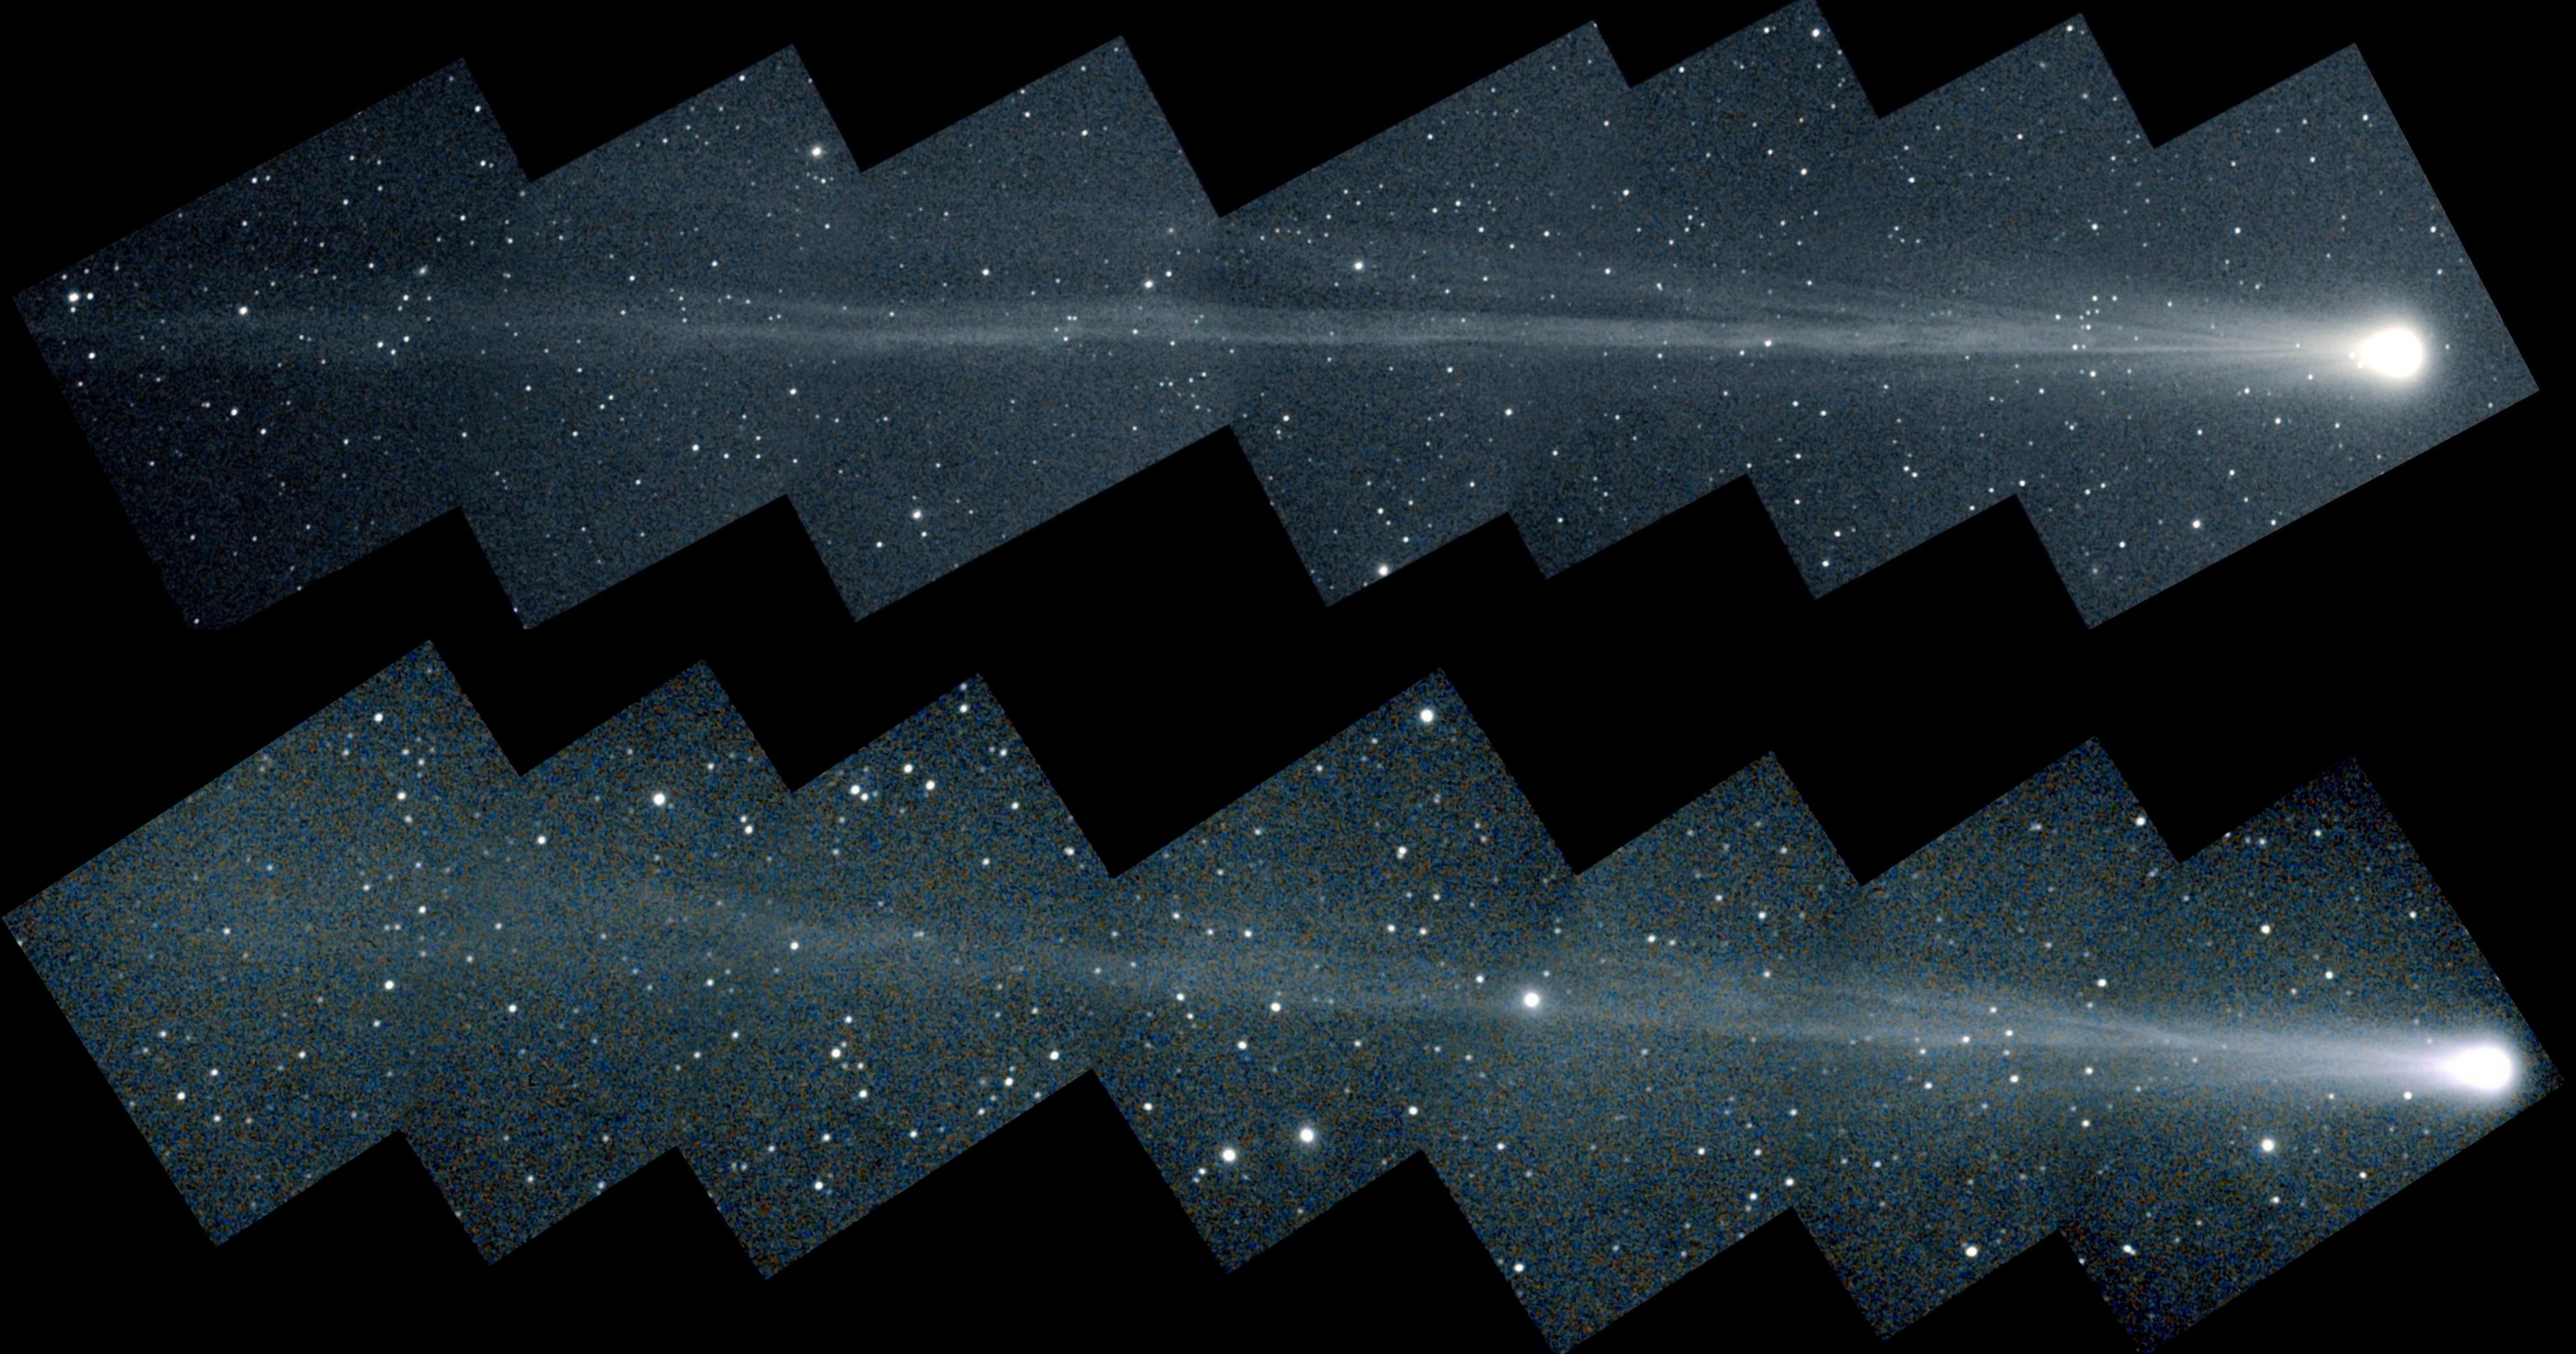 Kometa NEAT priblizhaetsya k Solncu